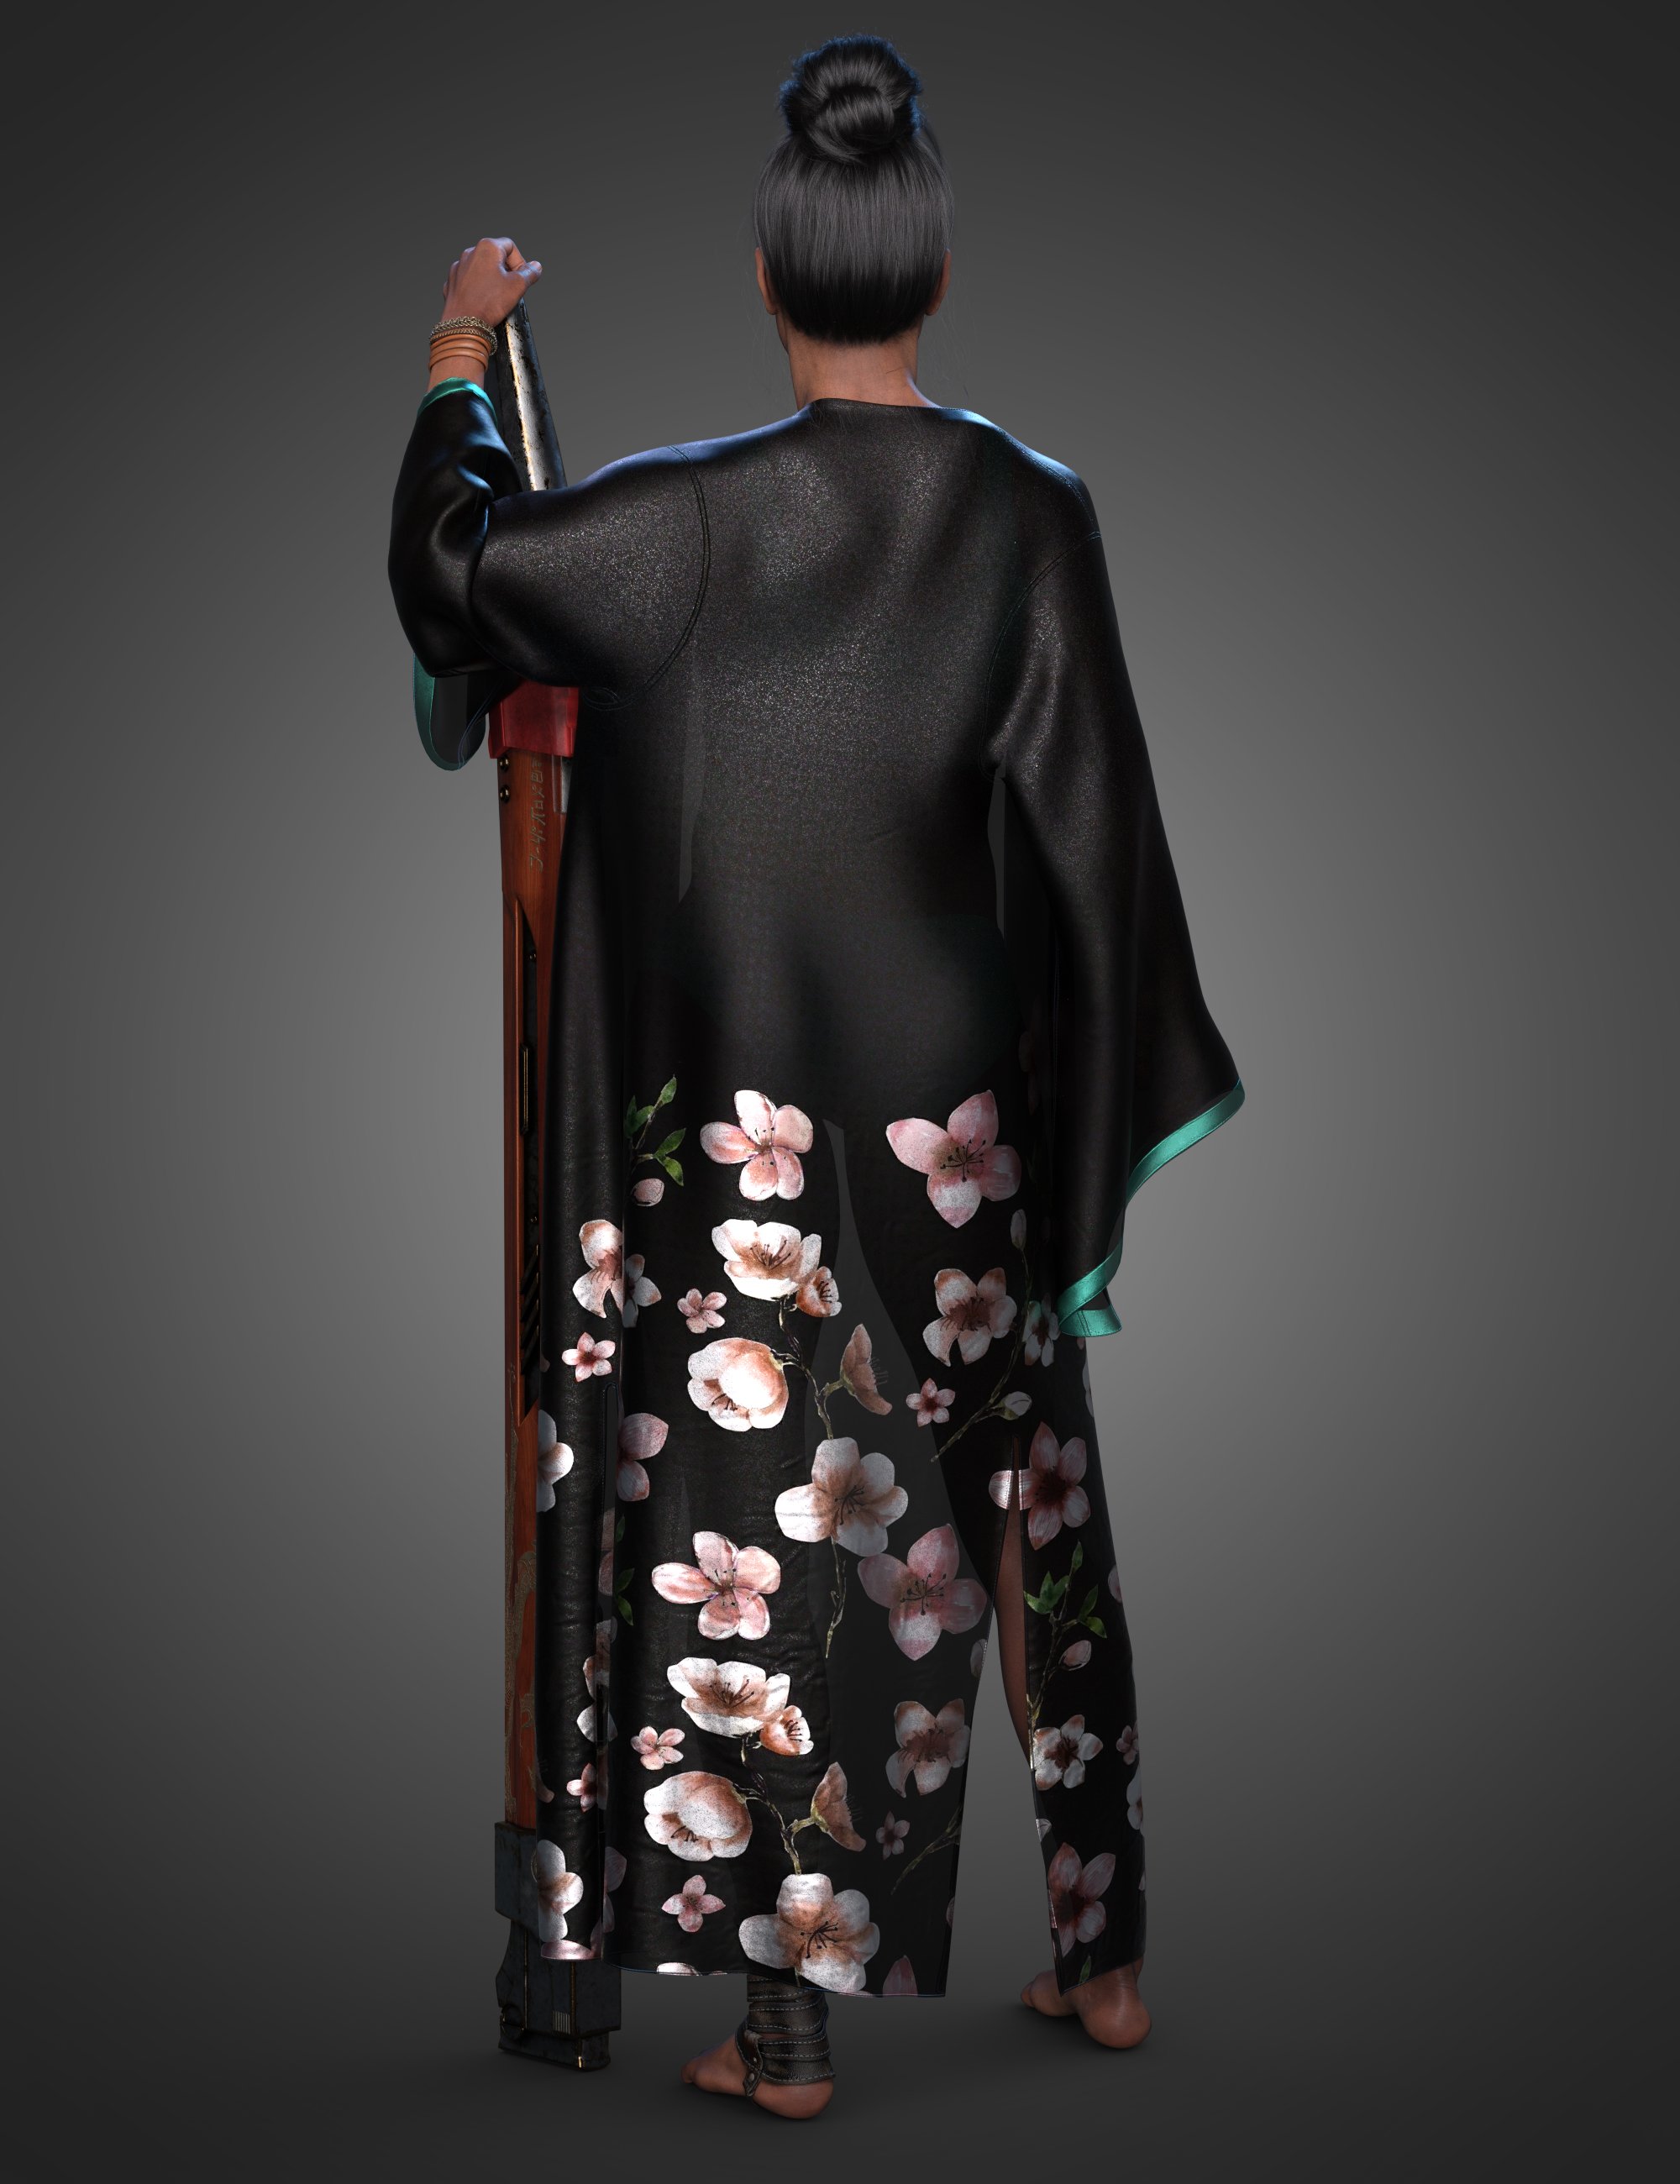 dForce Horizon Outfit for Genesis 8.1 Females by: Barbara BrundonUmblefuglySade, 3D Models by Daz 3D